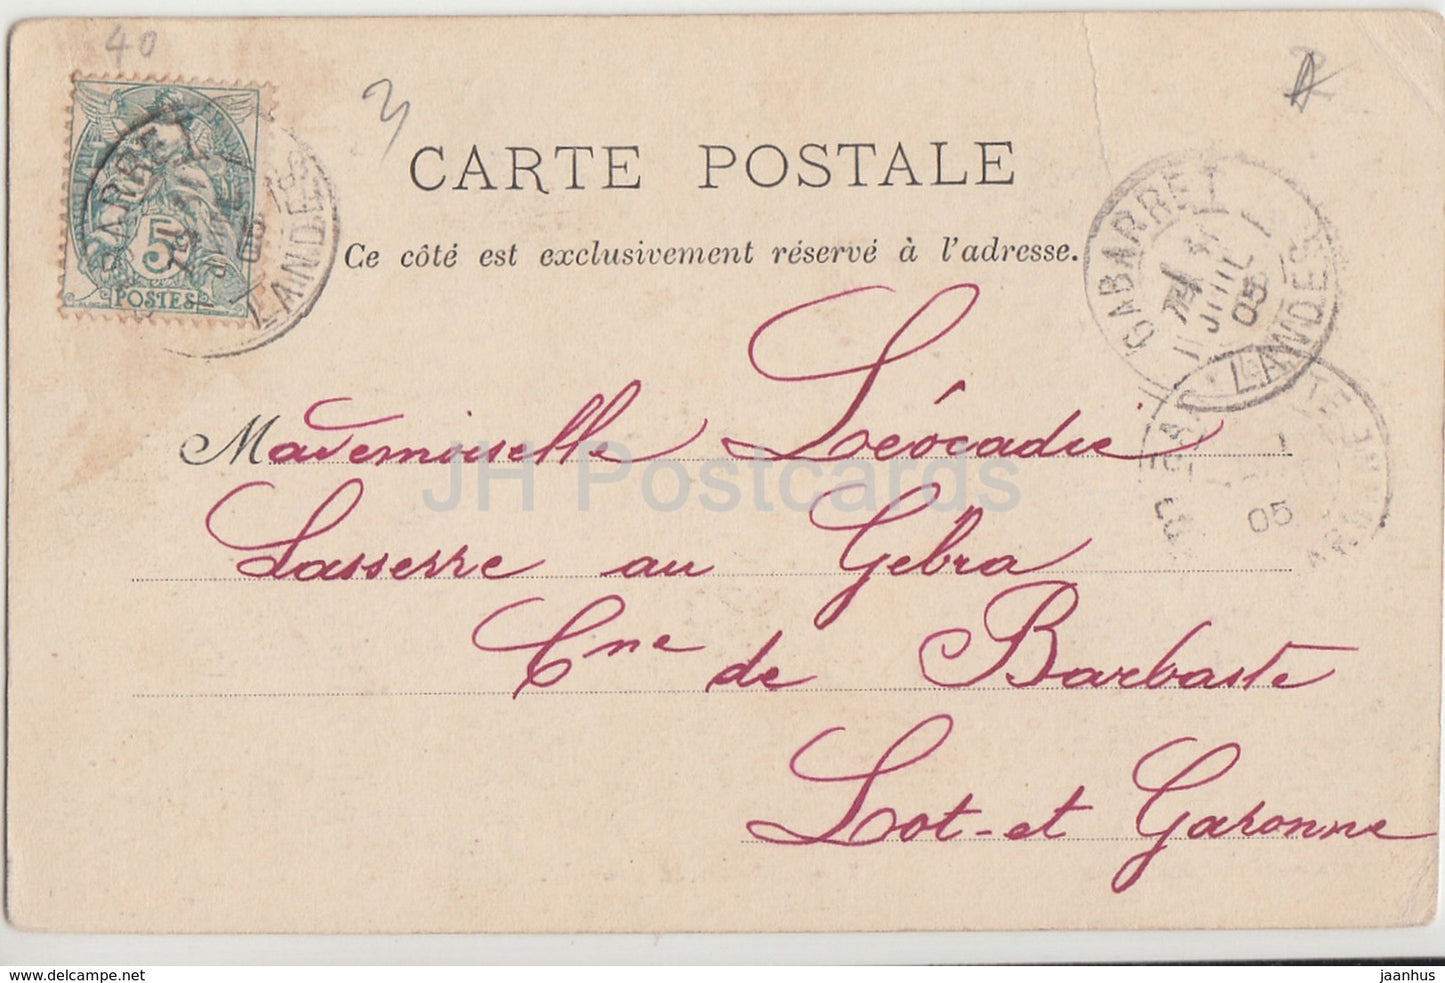 Château de Bournac - château - 7 - 1905 - carte postale ancienne - France - utilisé